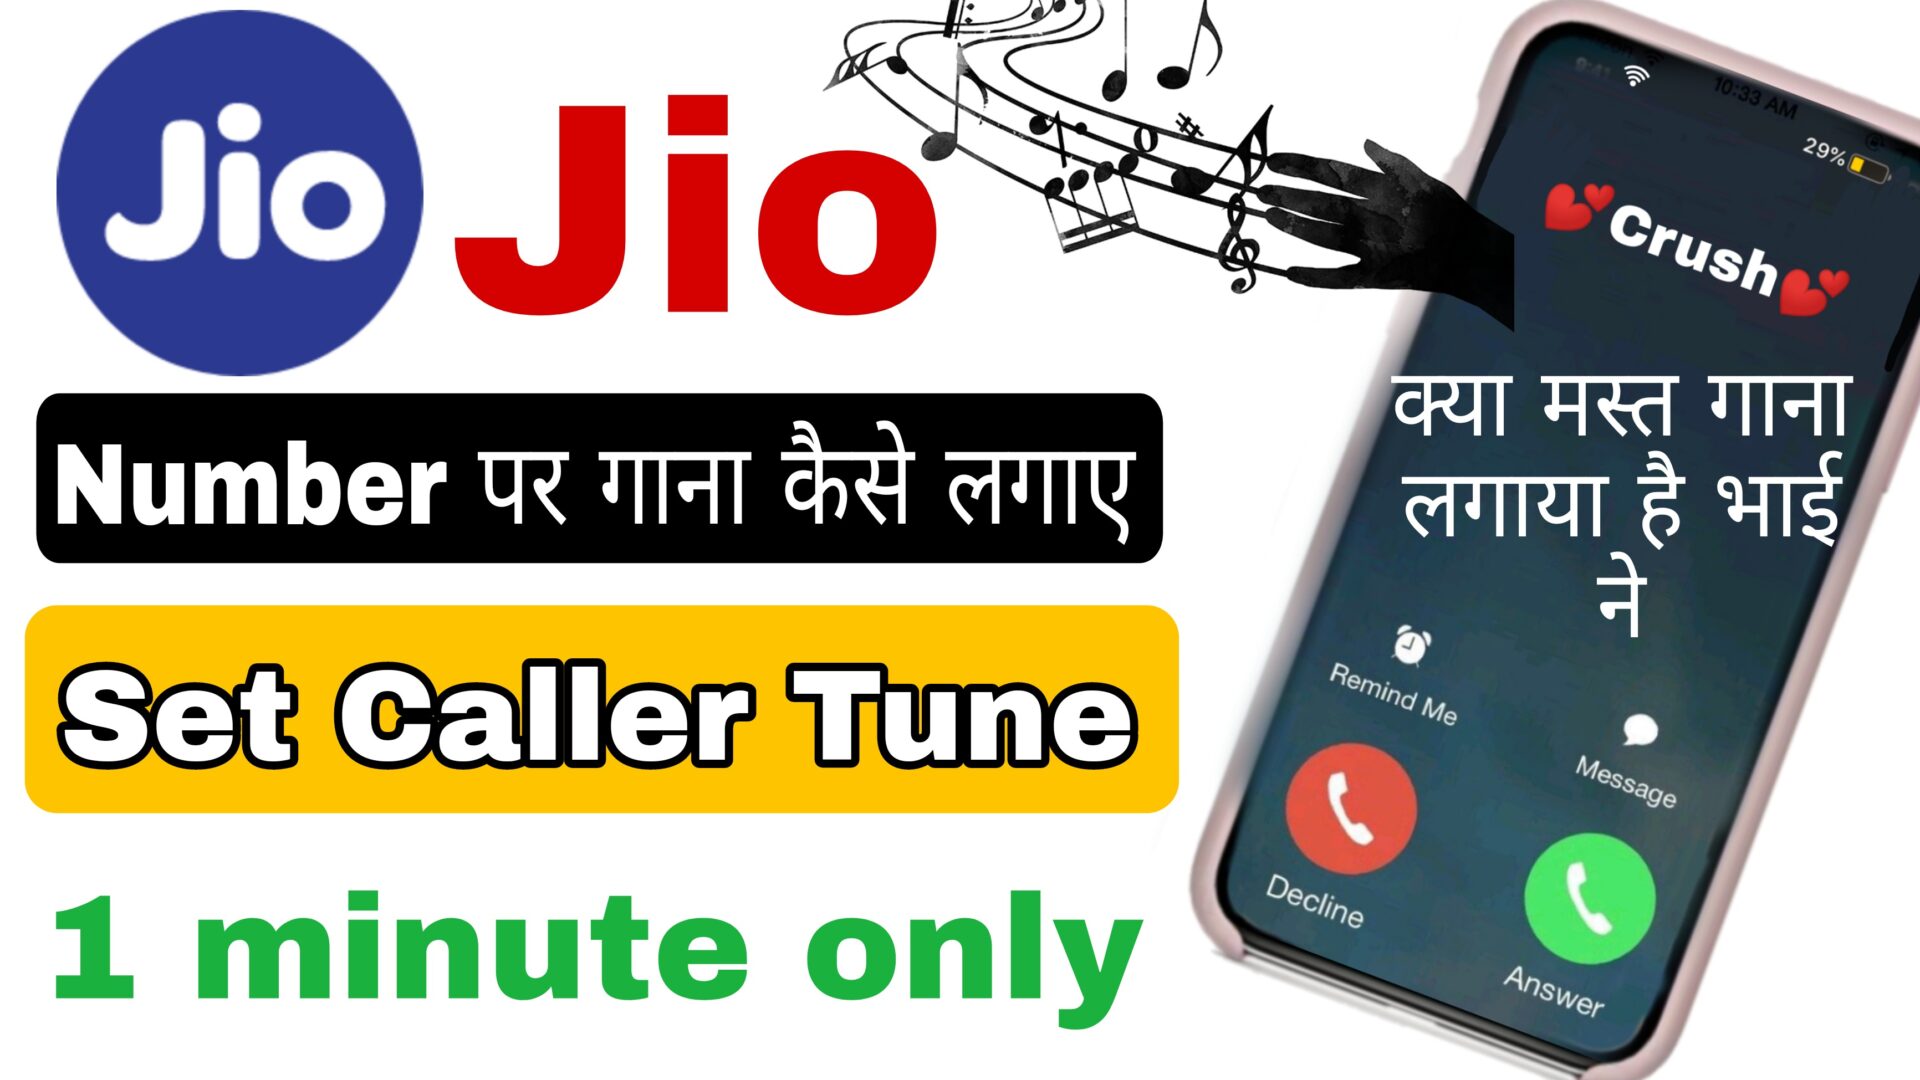 How to set caller tune in jio | jio caller tune in hindi